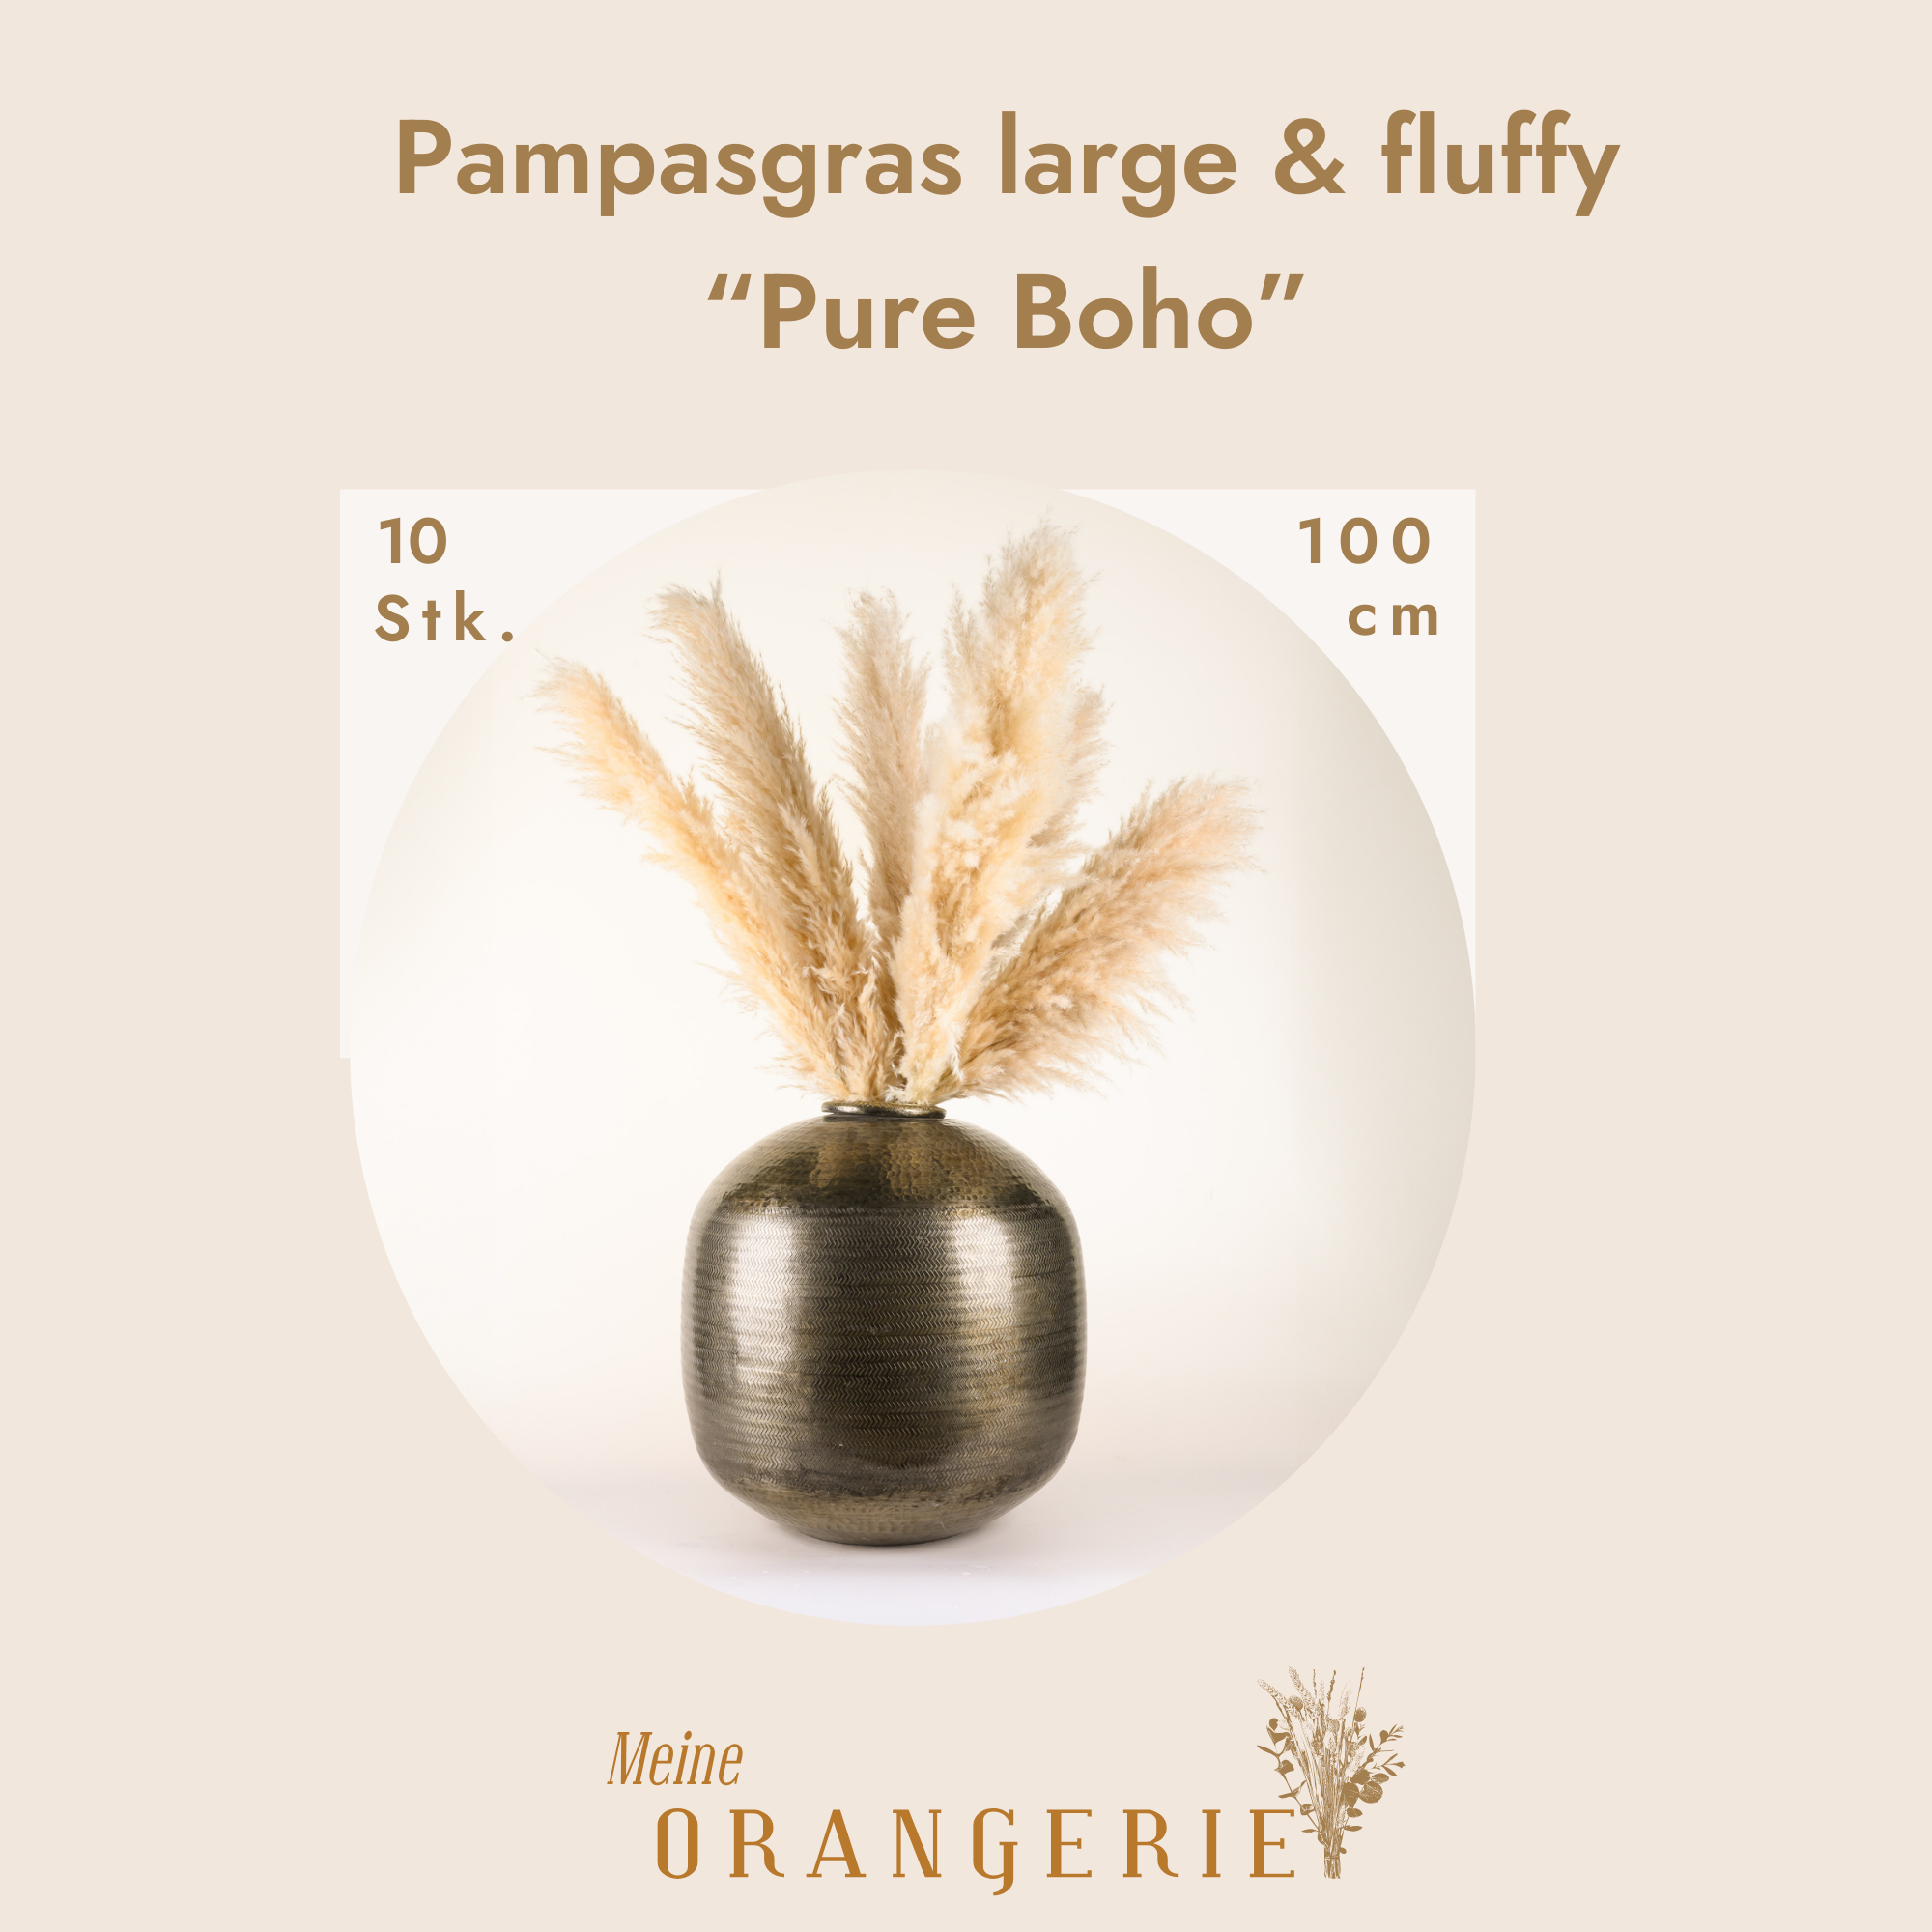 Pampasgras "Pure Boho" - 10 Stiele im Set (large & fluffy 100 cm)